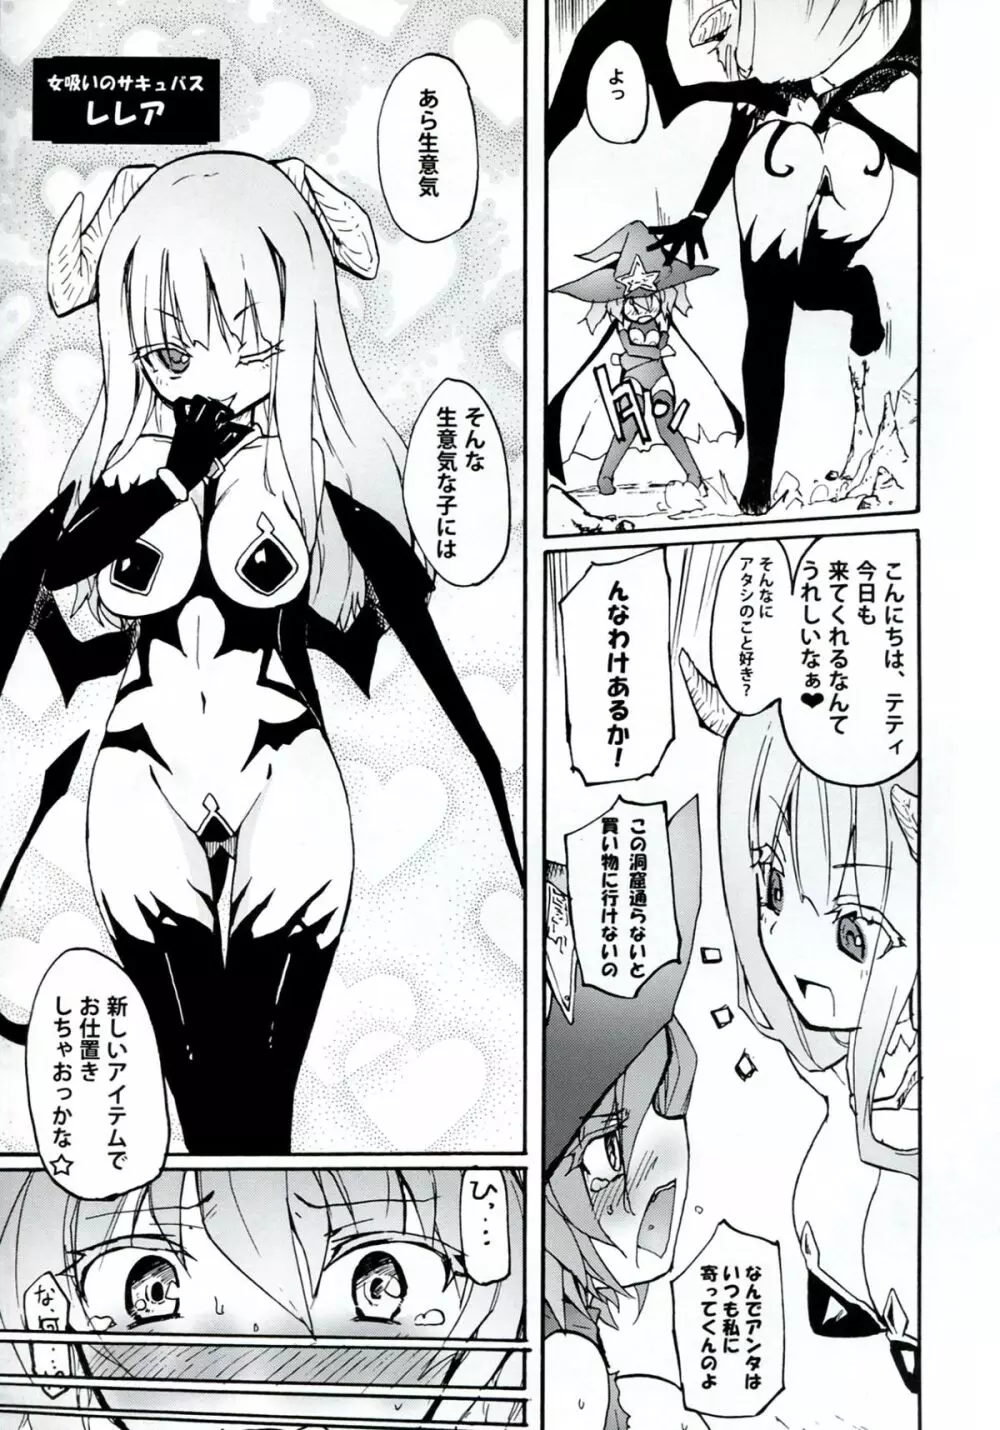 Homuraya Milk ★ Collection 2 - page43